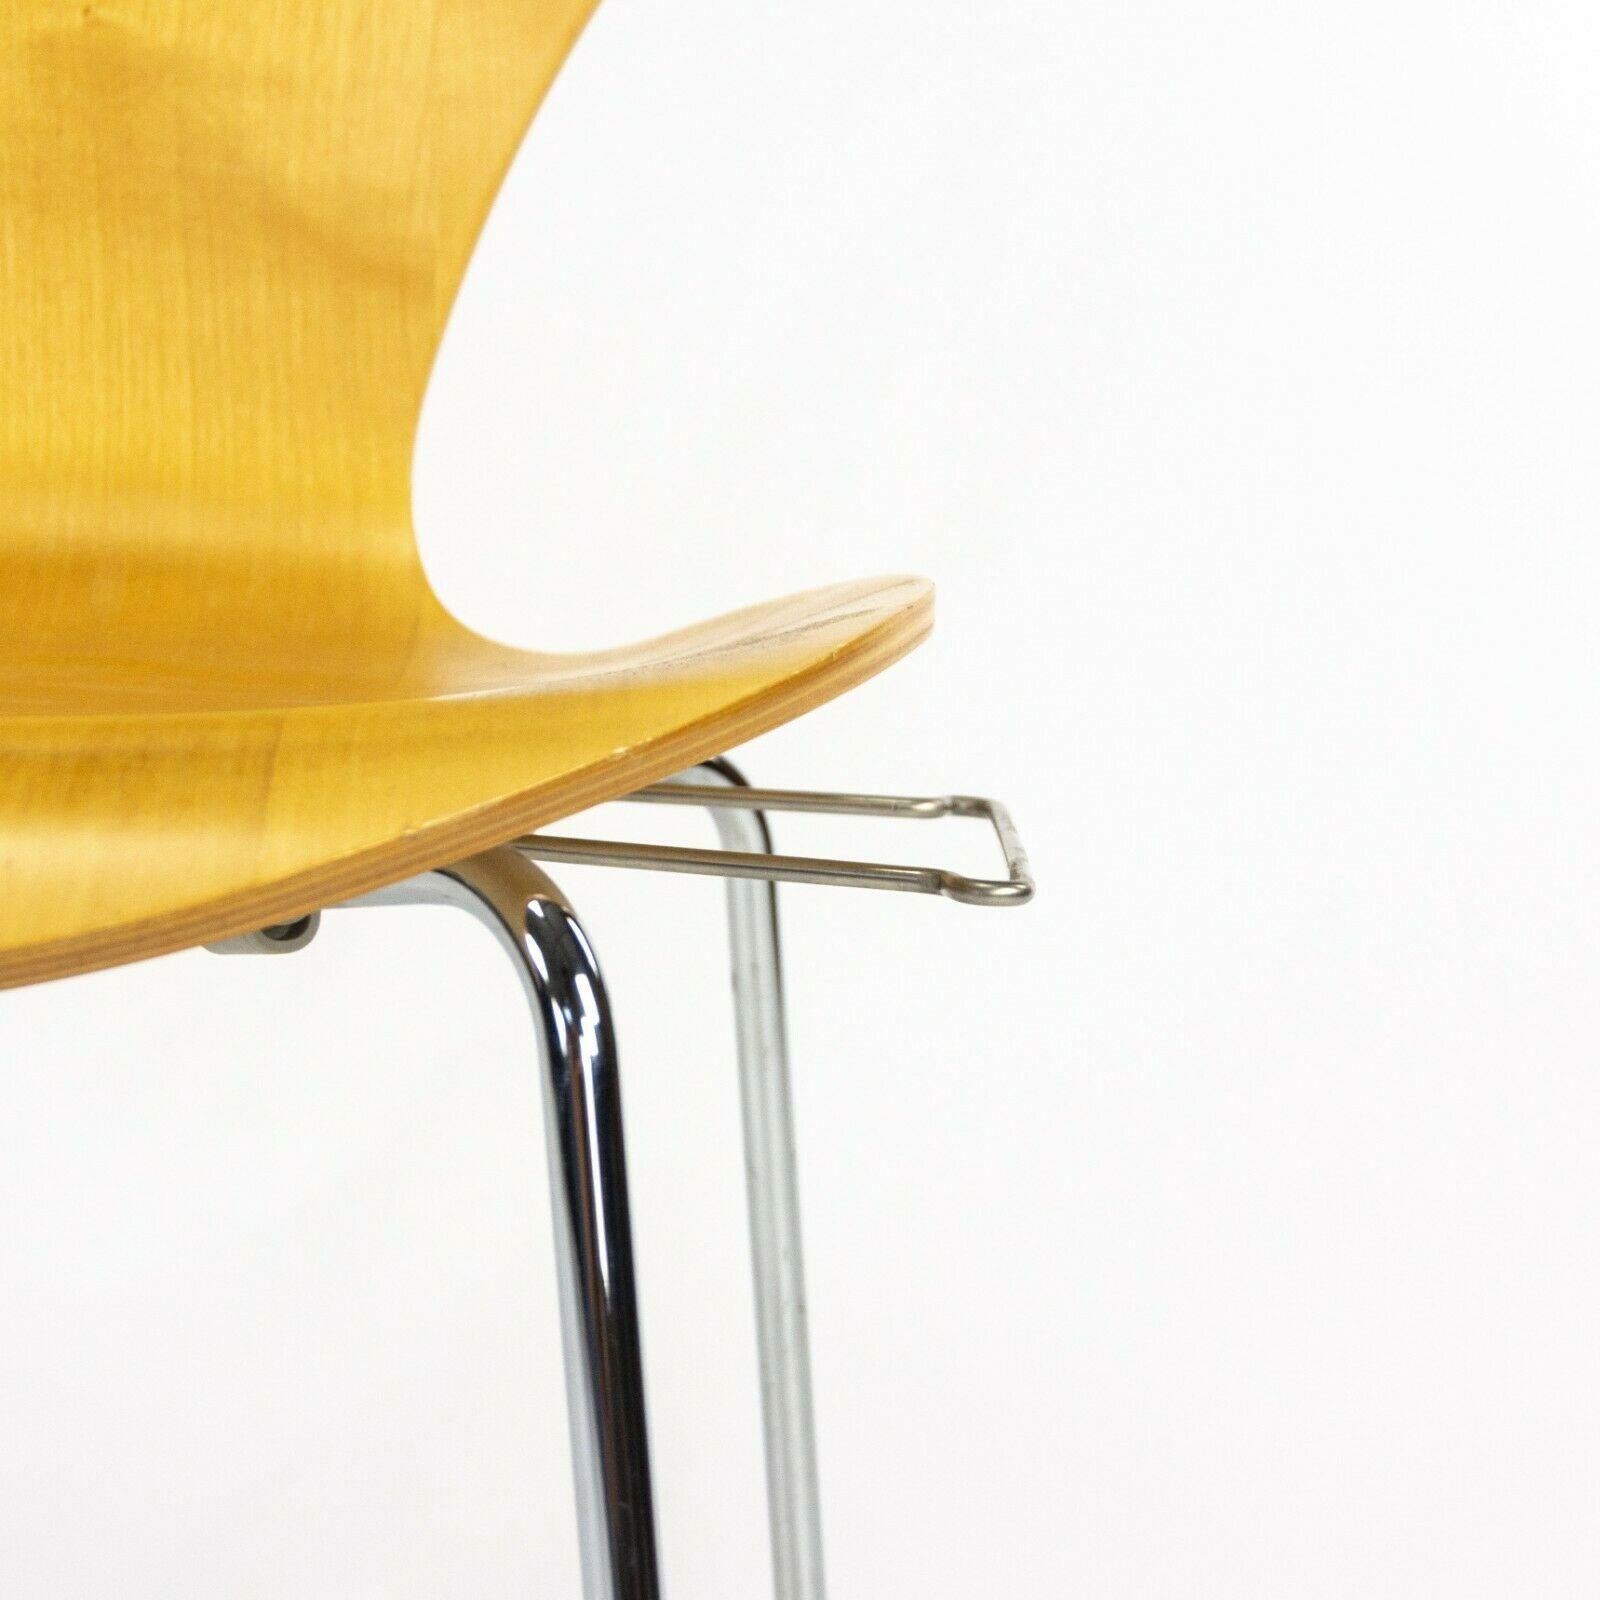 2001 Arne Jacobsen for Fritz Hansen Knoll Series 7 Stacking & Interlocking Chair For Sale 5